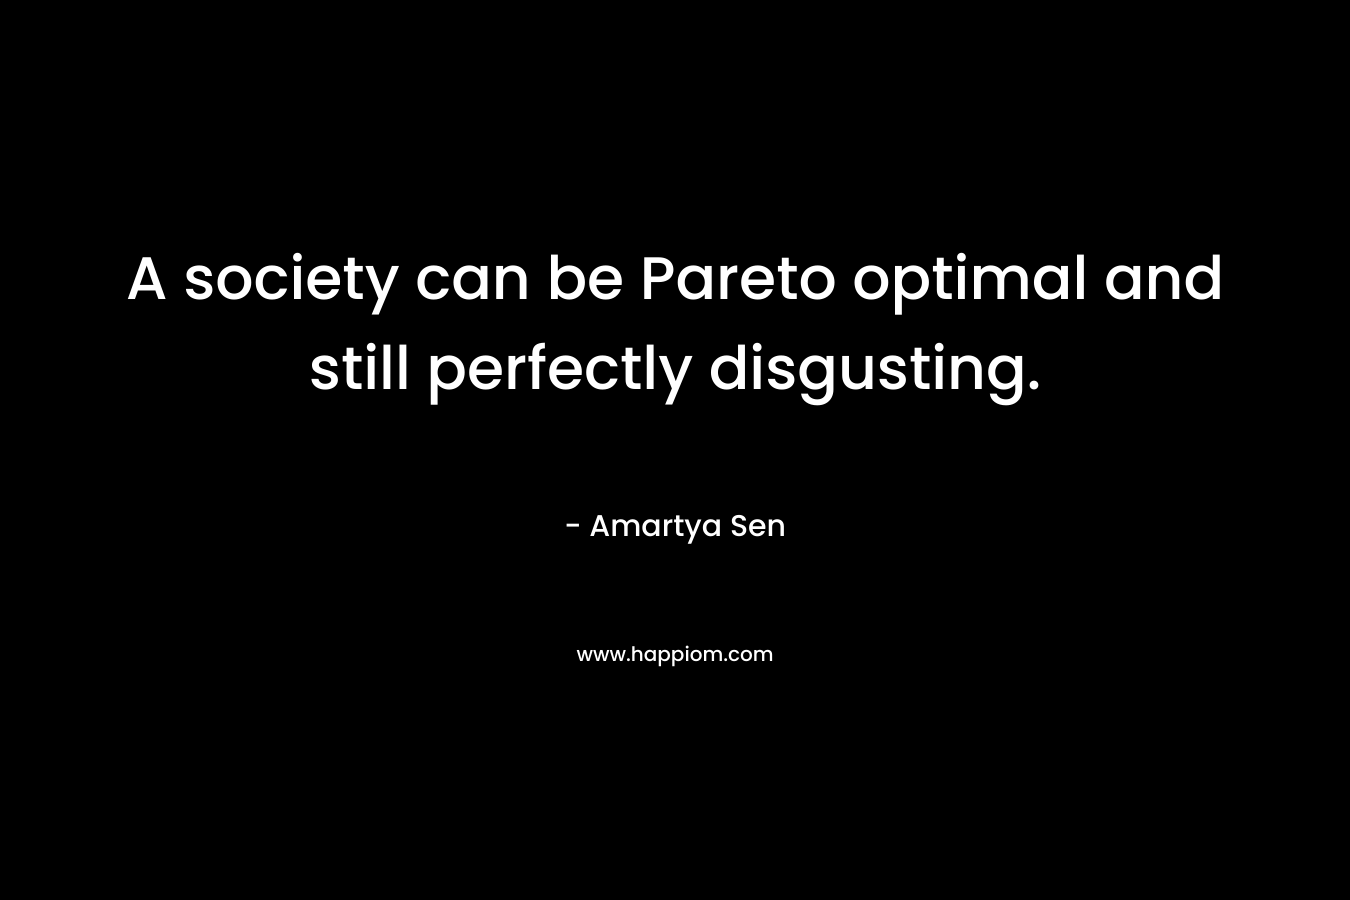 A society can be Pareto optimal and still perfectly disgusting. – Amartya Sen